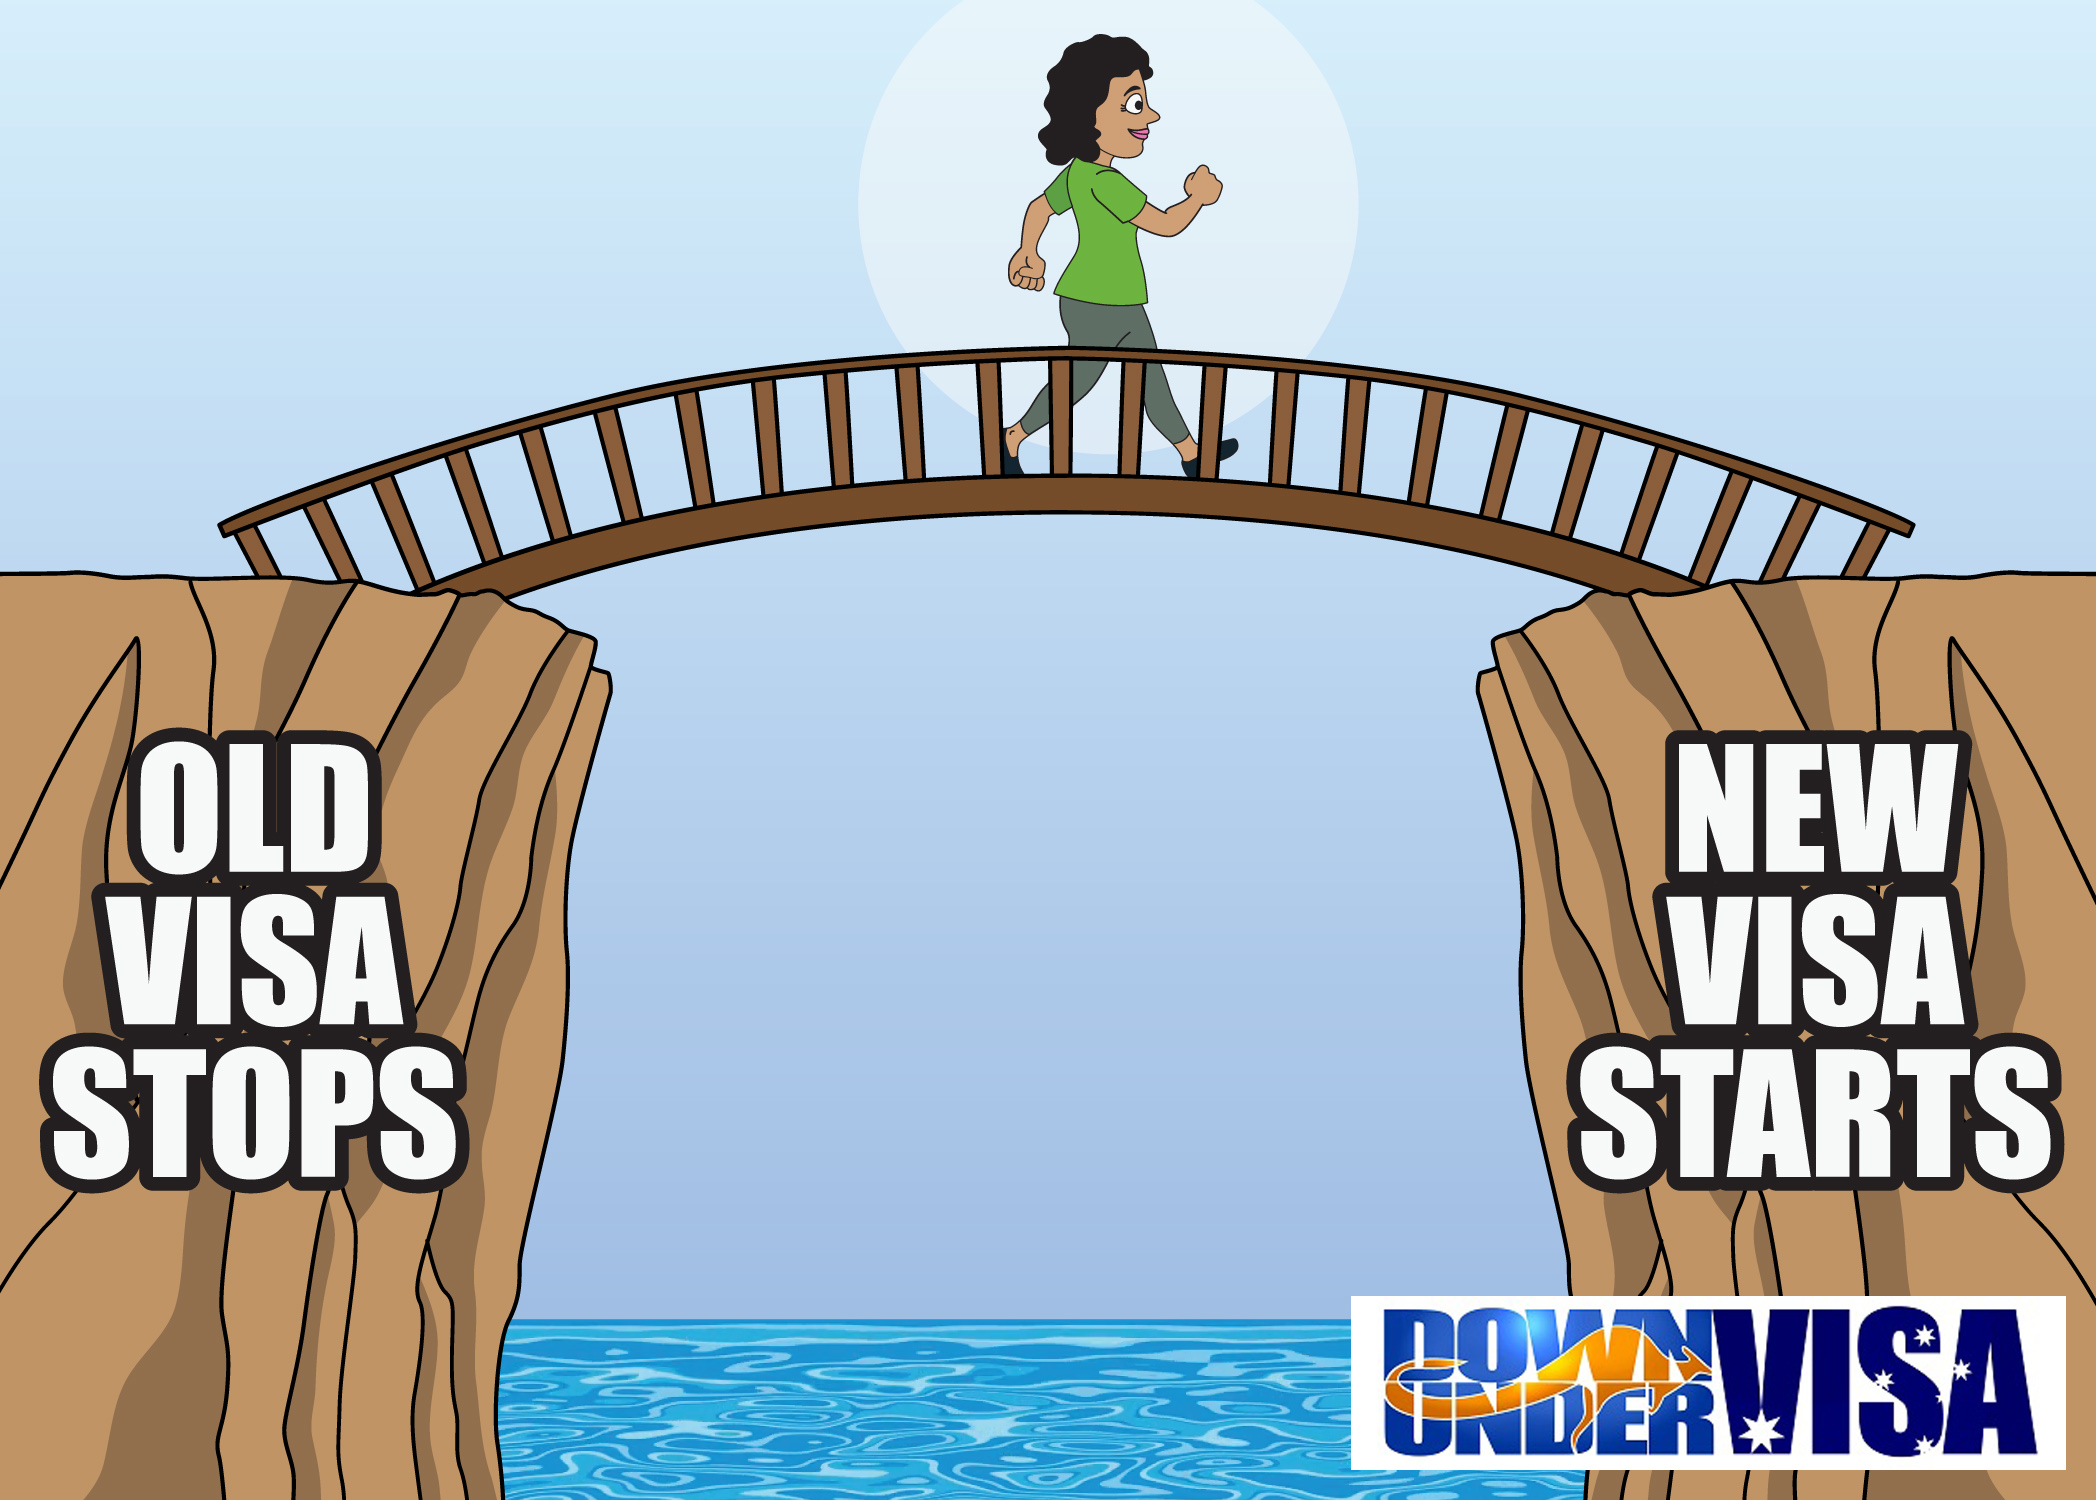 A bridging visa is a bridge between an expiring visa and an undecided new visa application